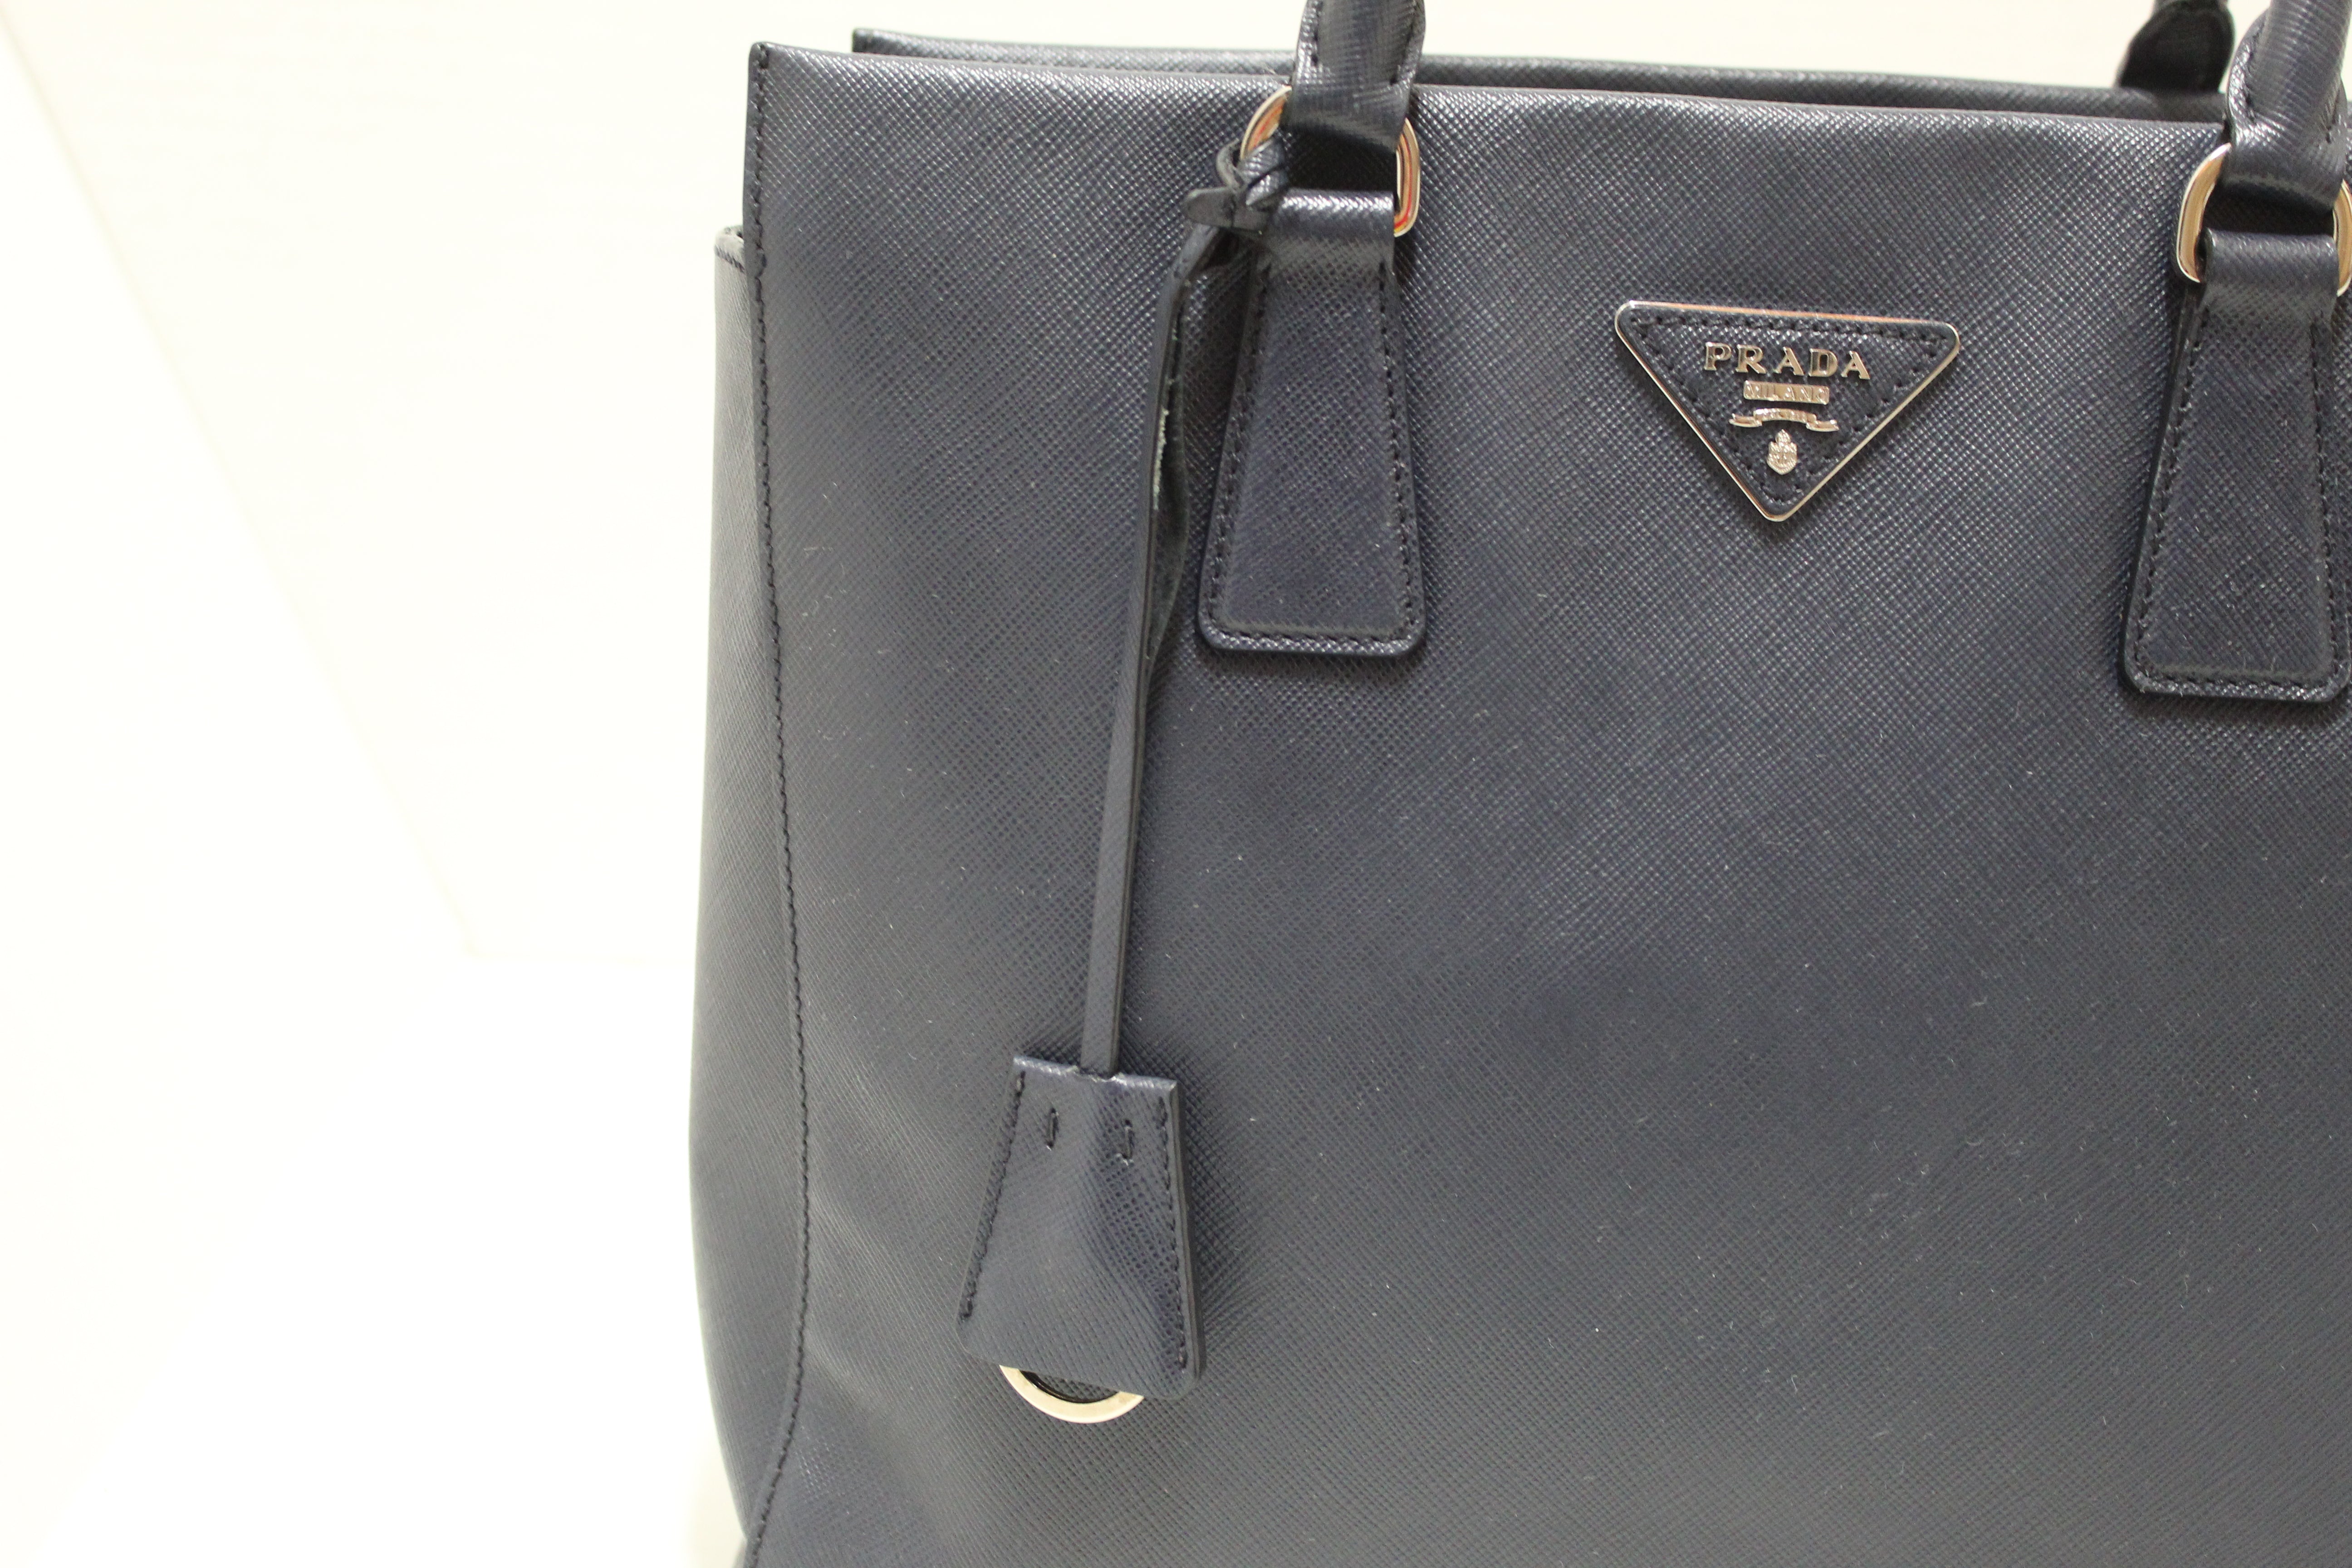 Saffiano PRADA Black Tessuto Tote Bag Very Good Condition / Large